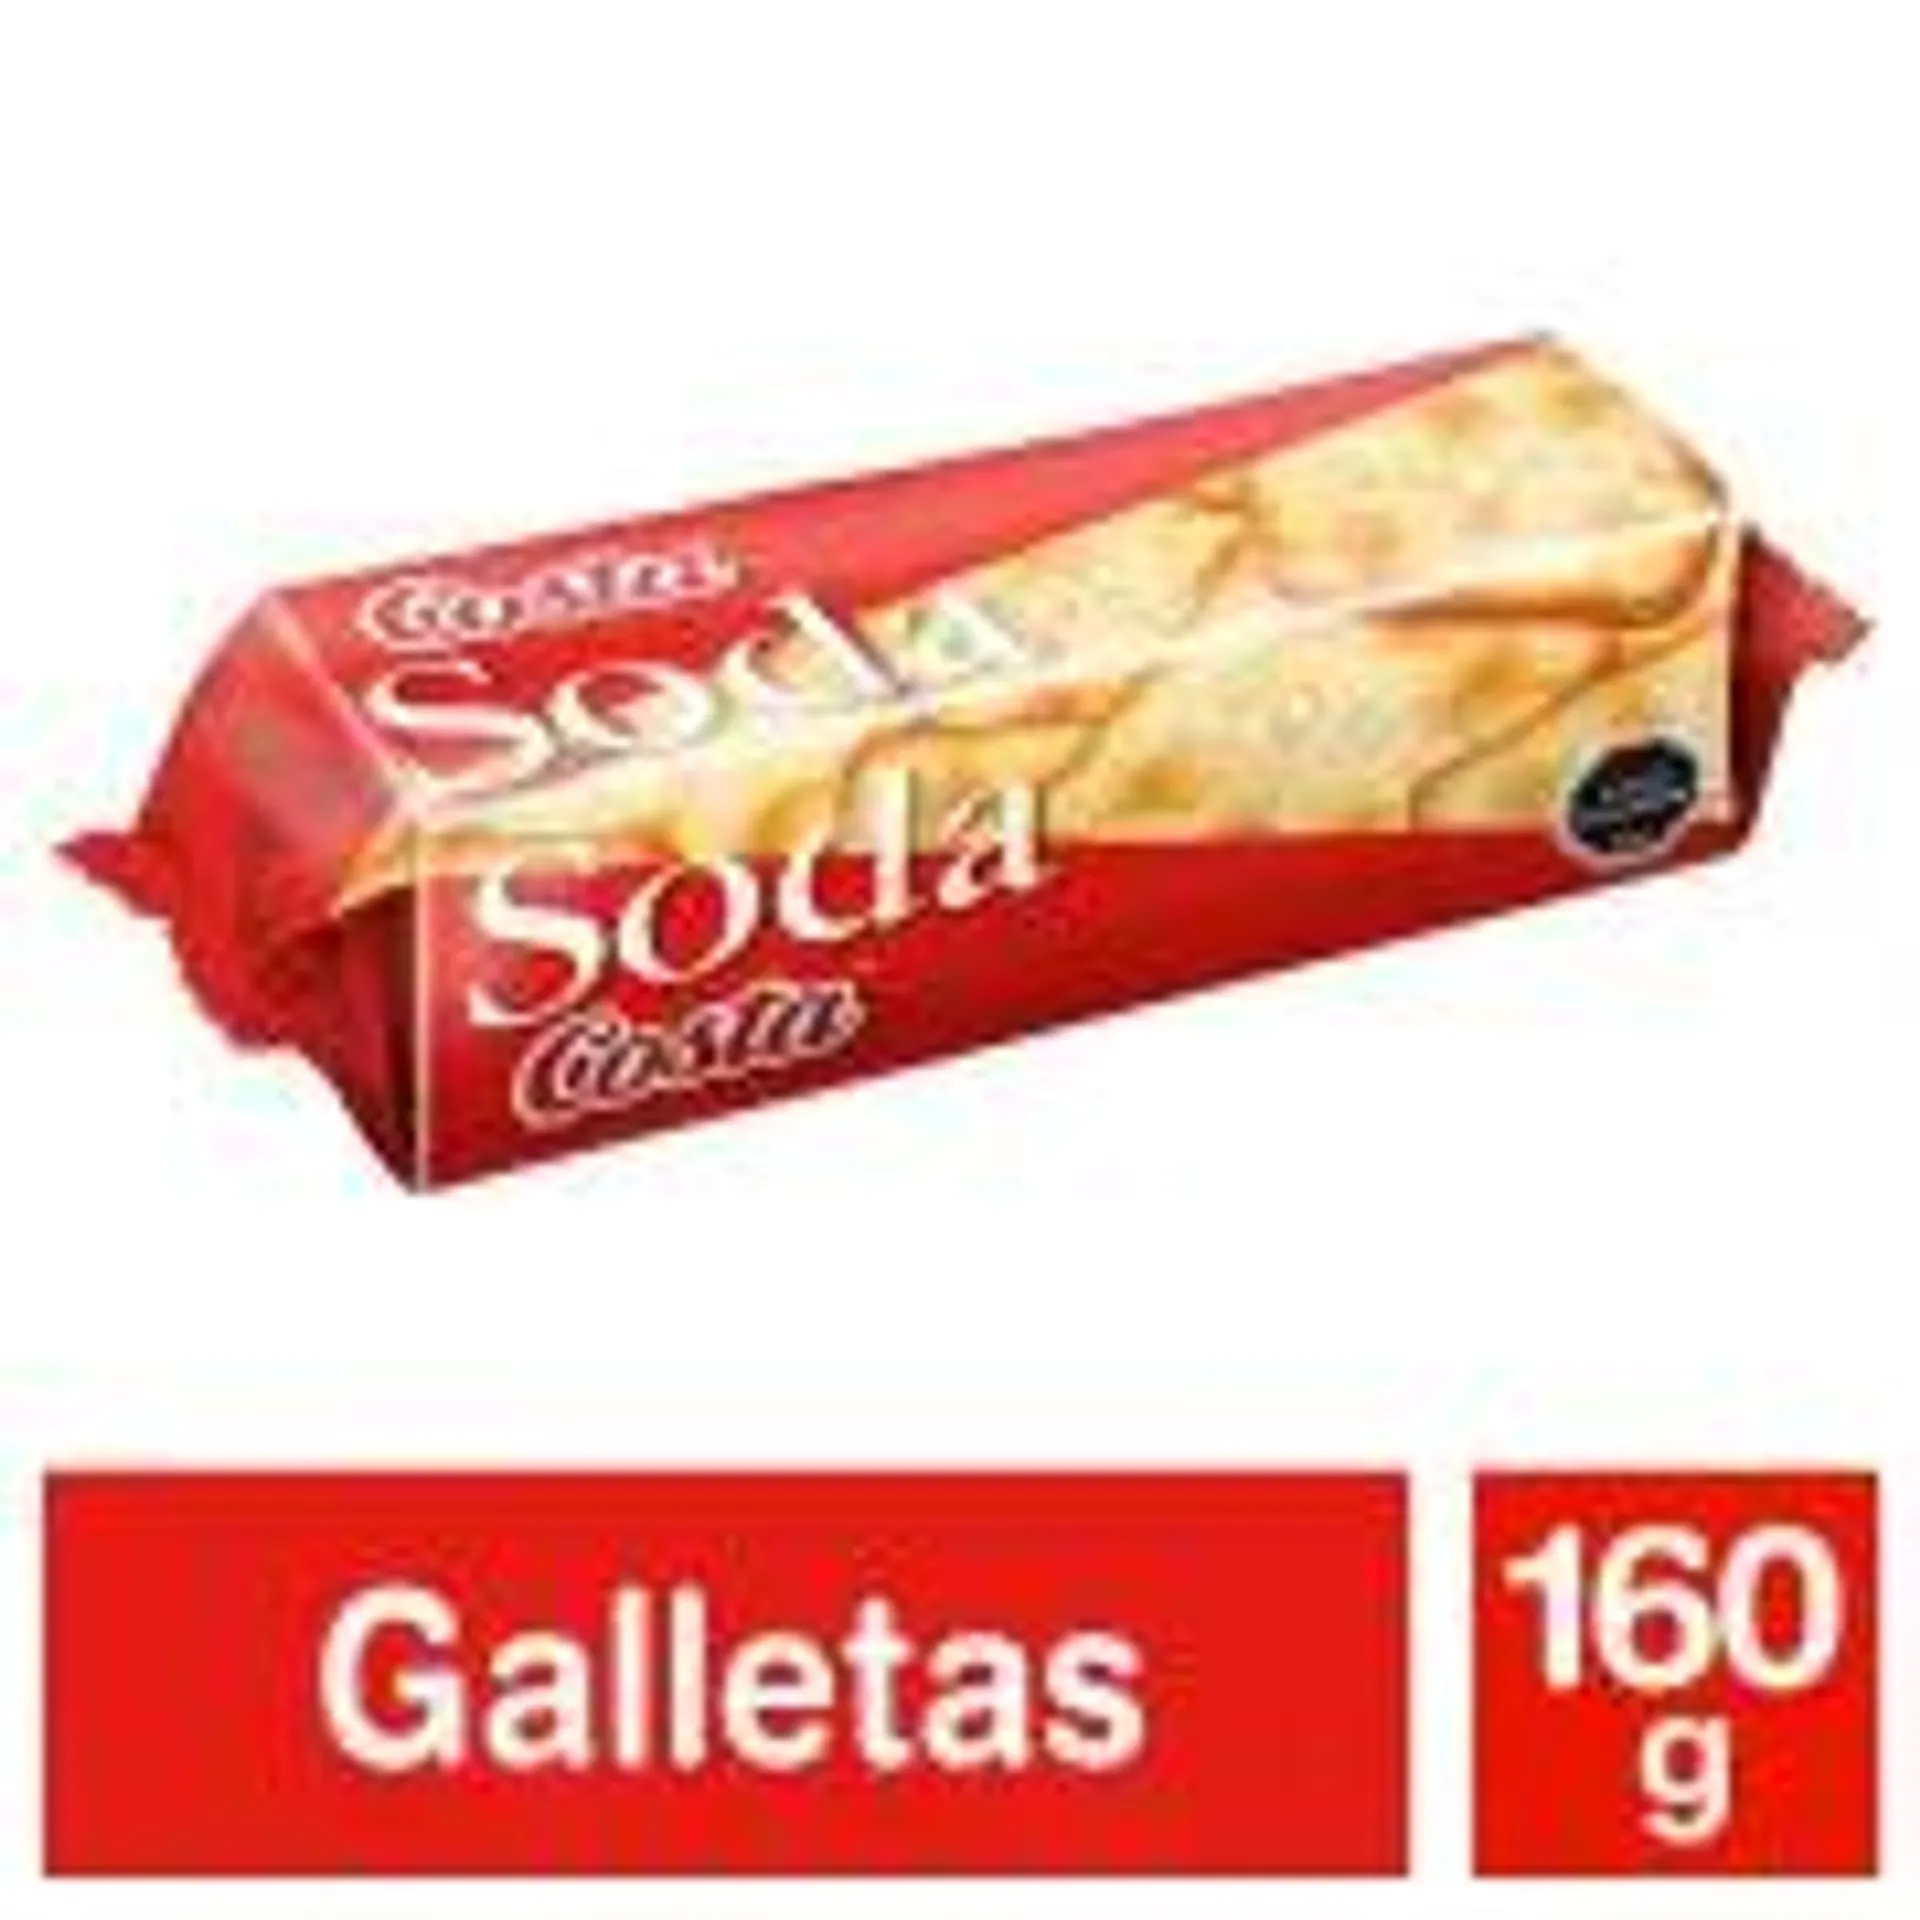 Galleta Soda, 160 g